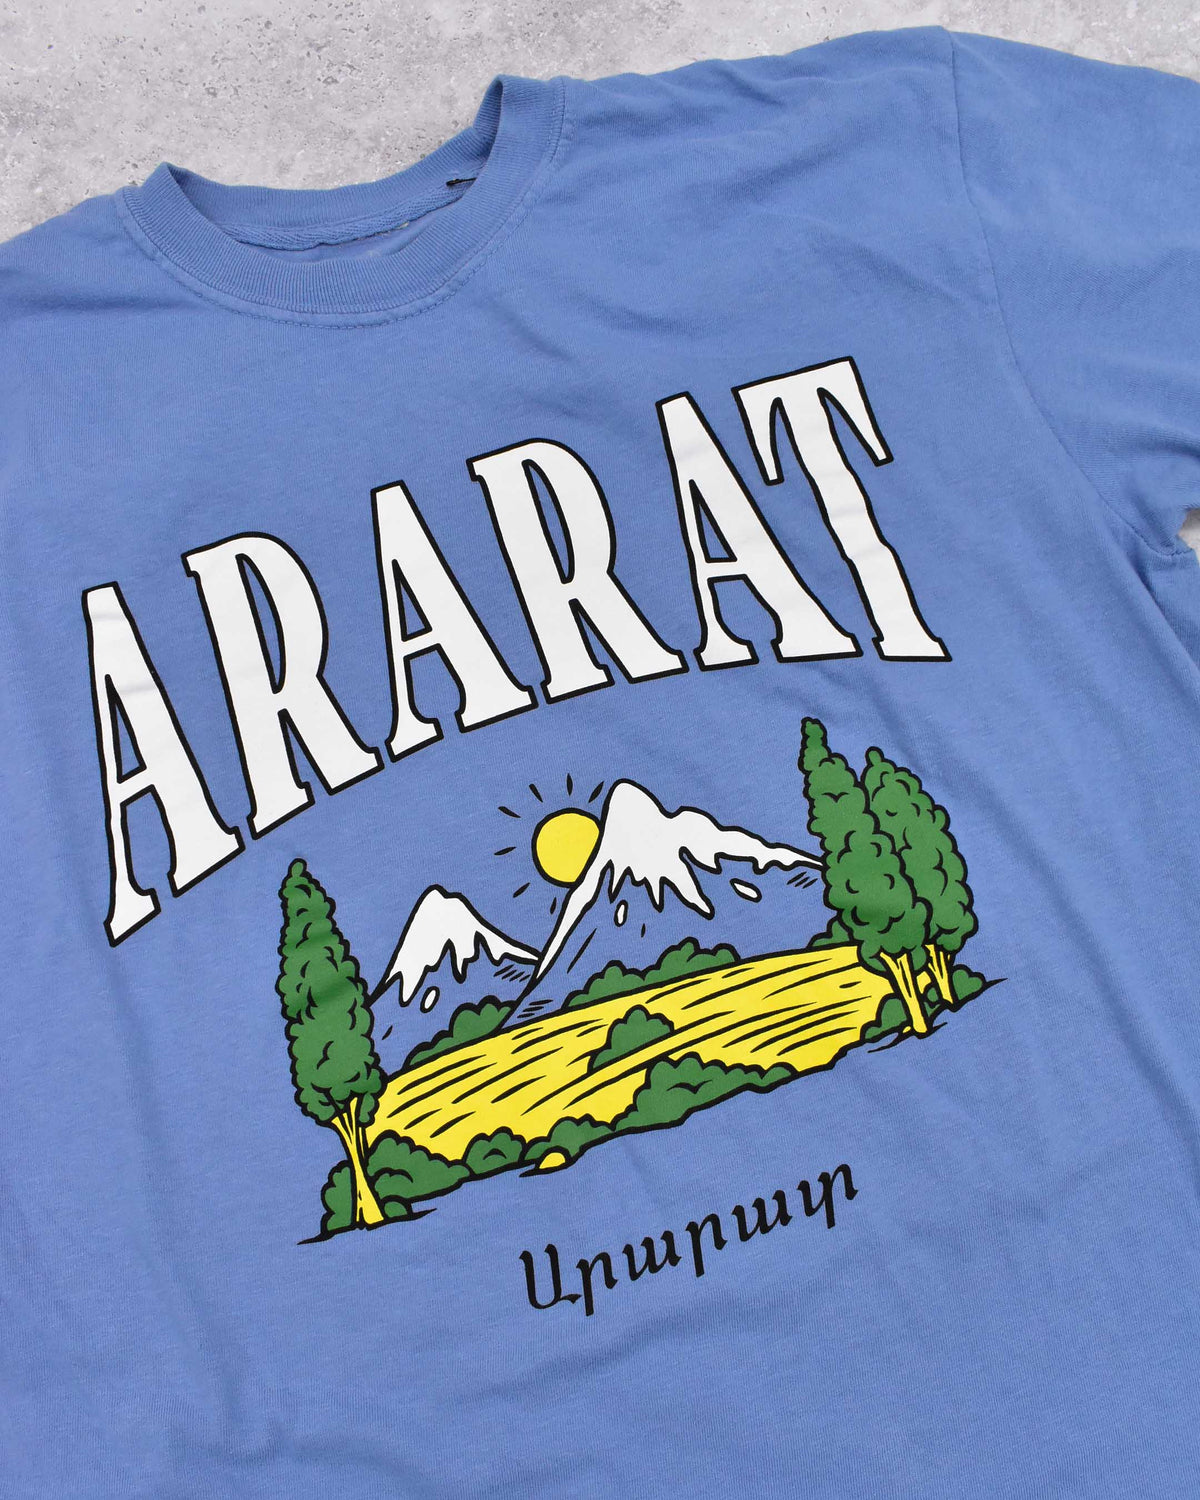 🚨ONLY ONE🚨 Mount Ararat Vintage Feel T-Shirt - LARGE